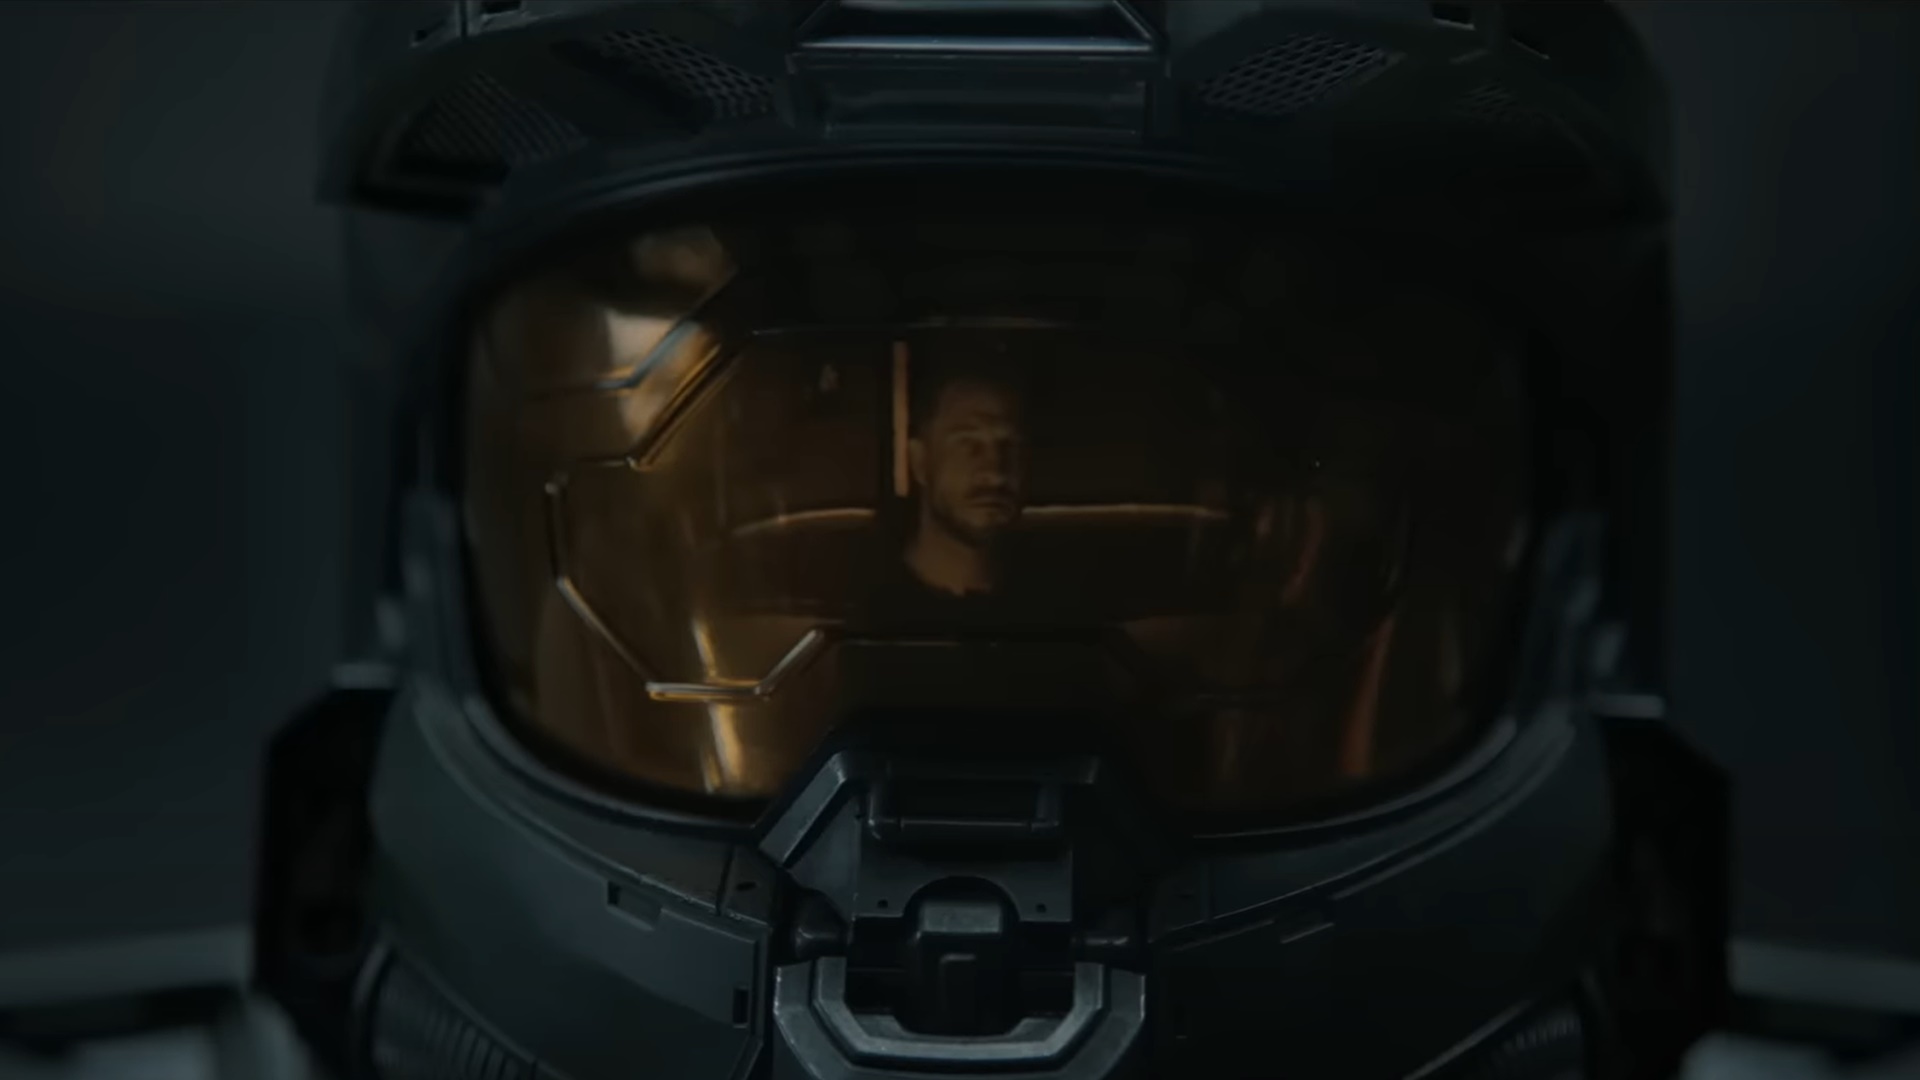 Season 2 image of John-117 reflected in his Mjolnir helmet